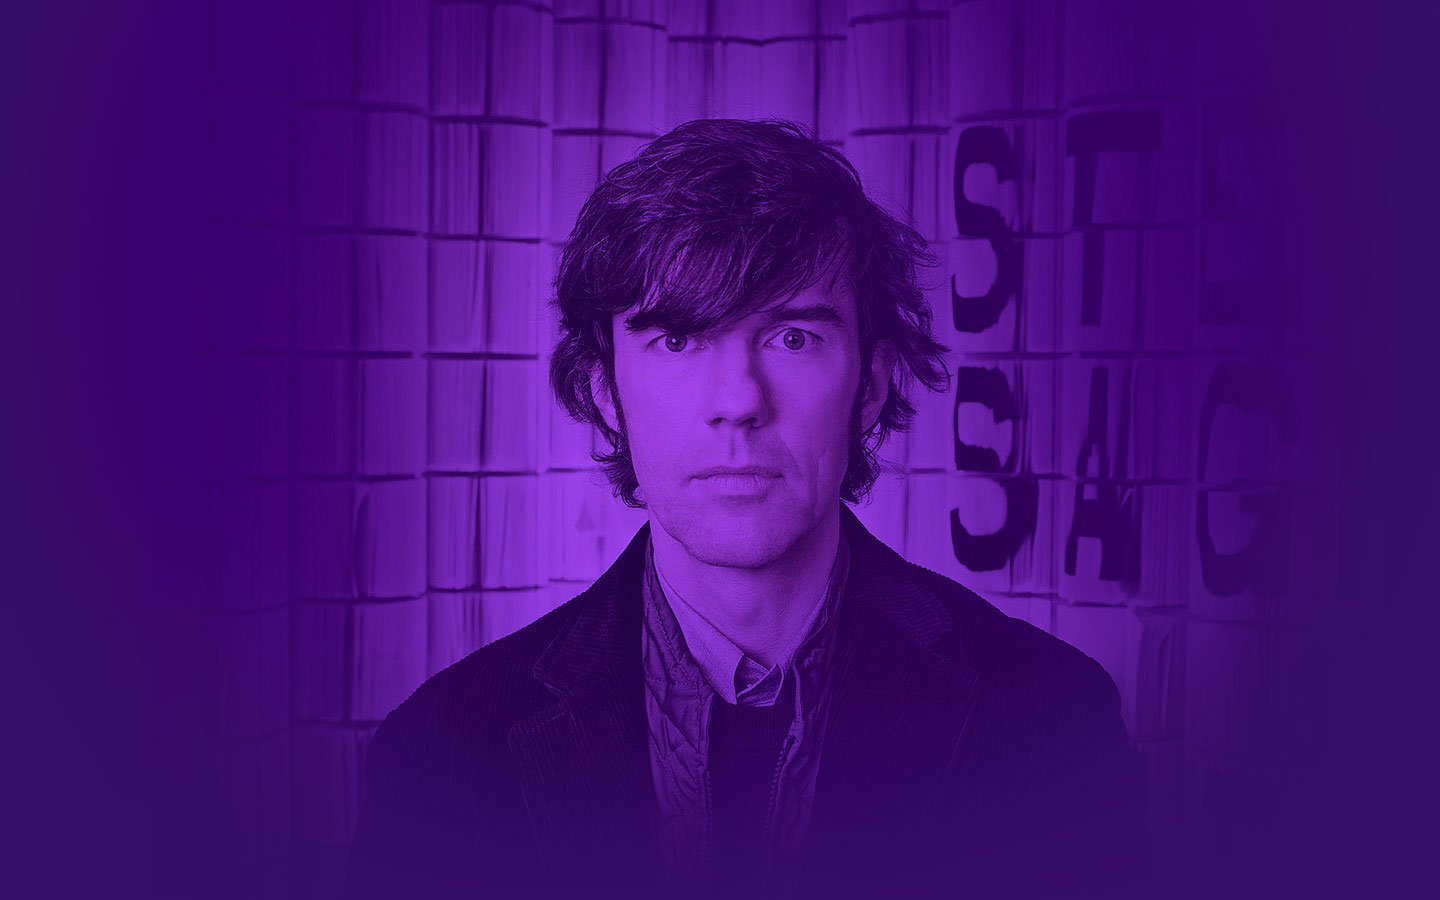 Stefan
Sagmeister